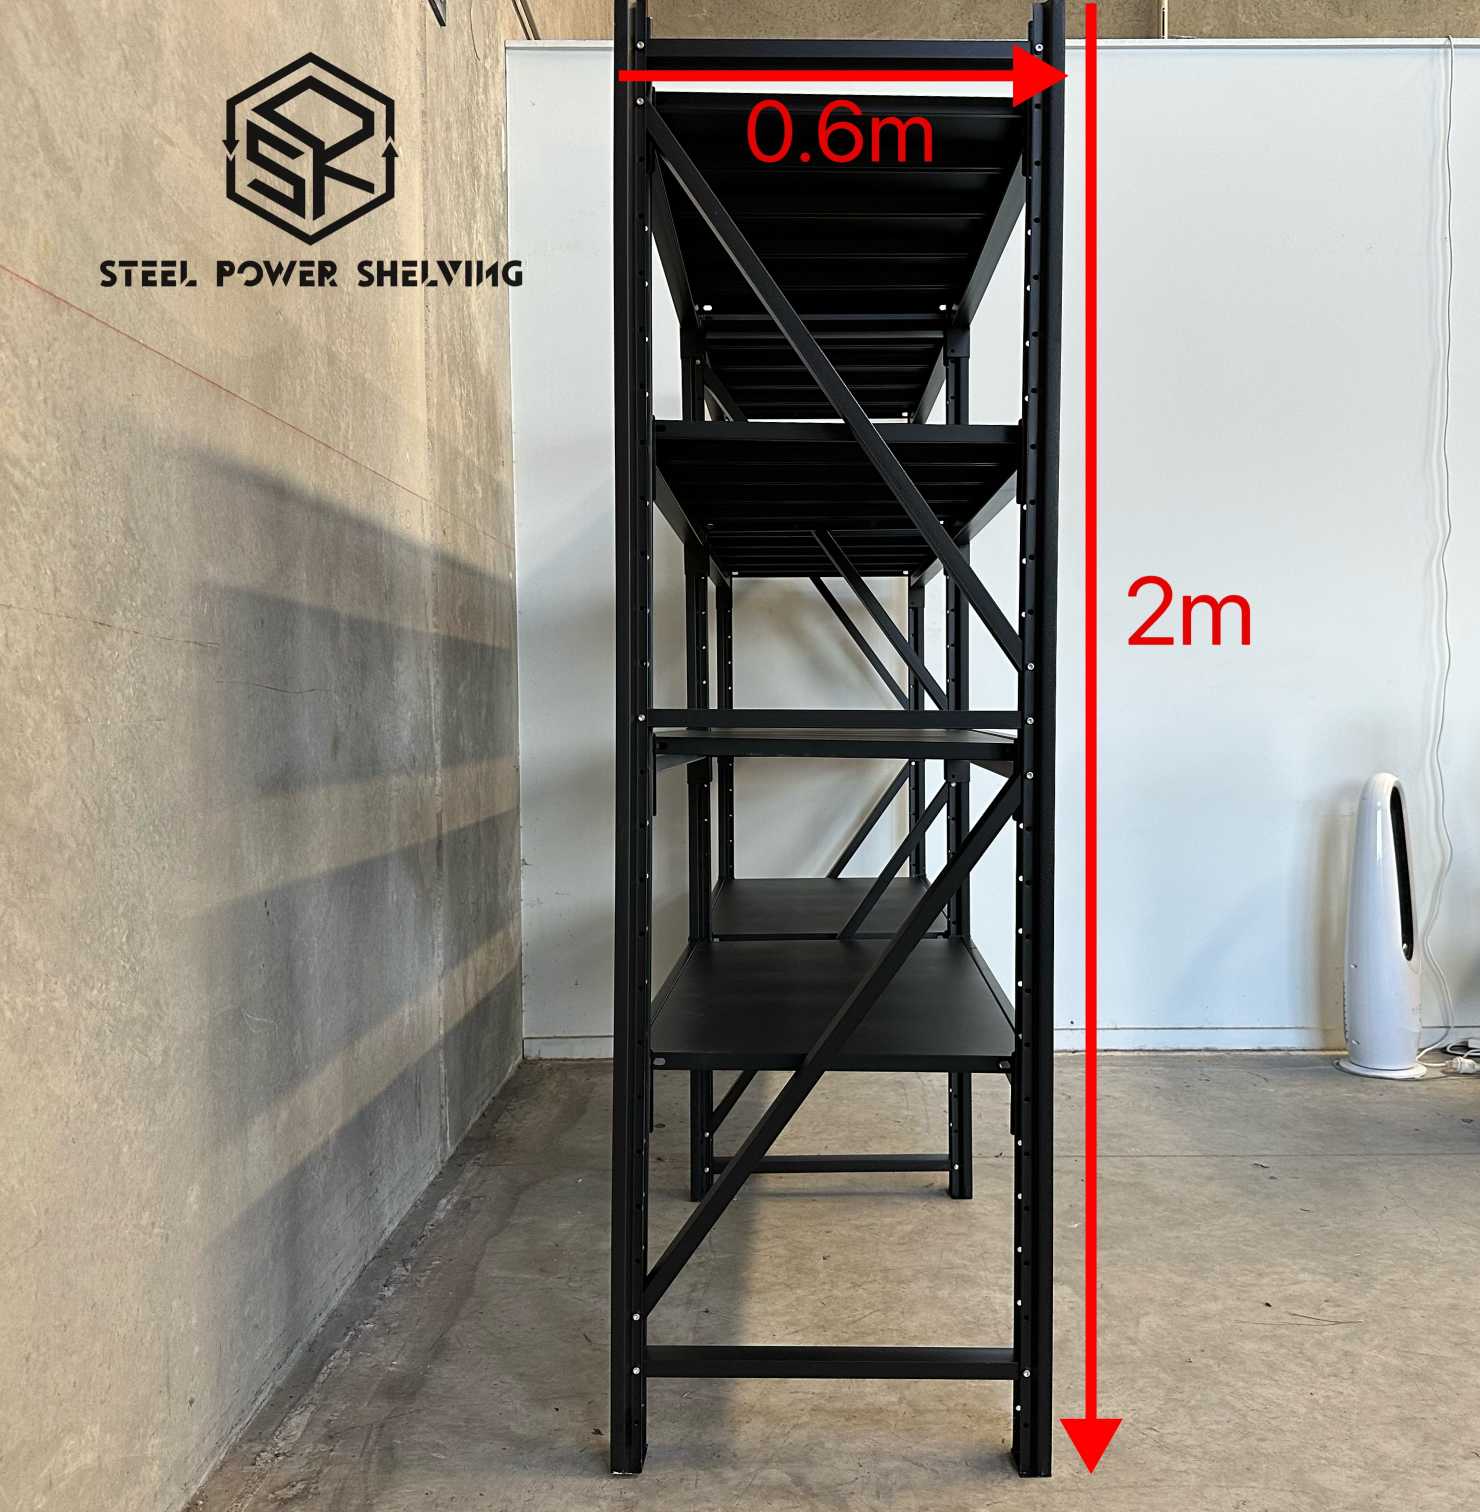 Shelf 2.0m(H) x 4.0m(L) x 0.6m(D) 2000kg Longspan Shelving: